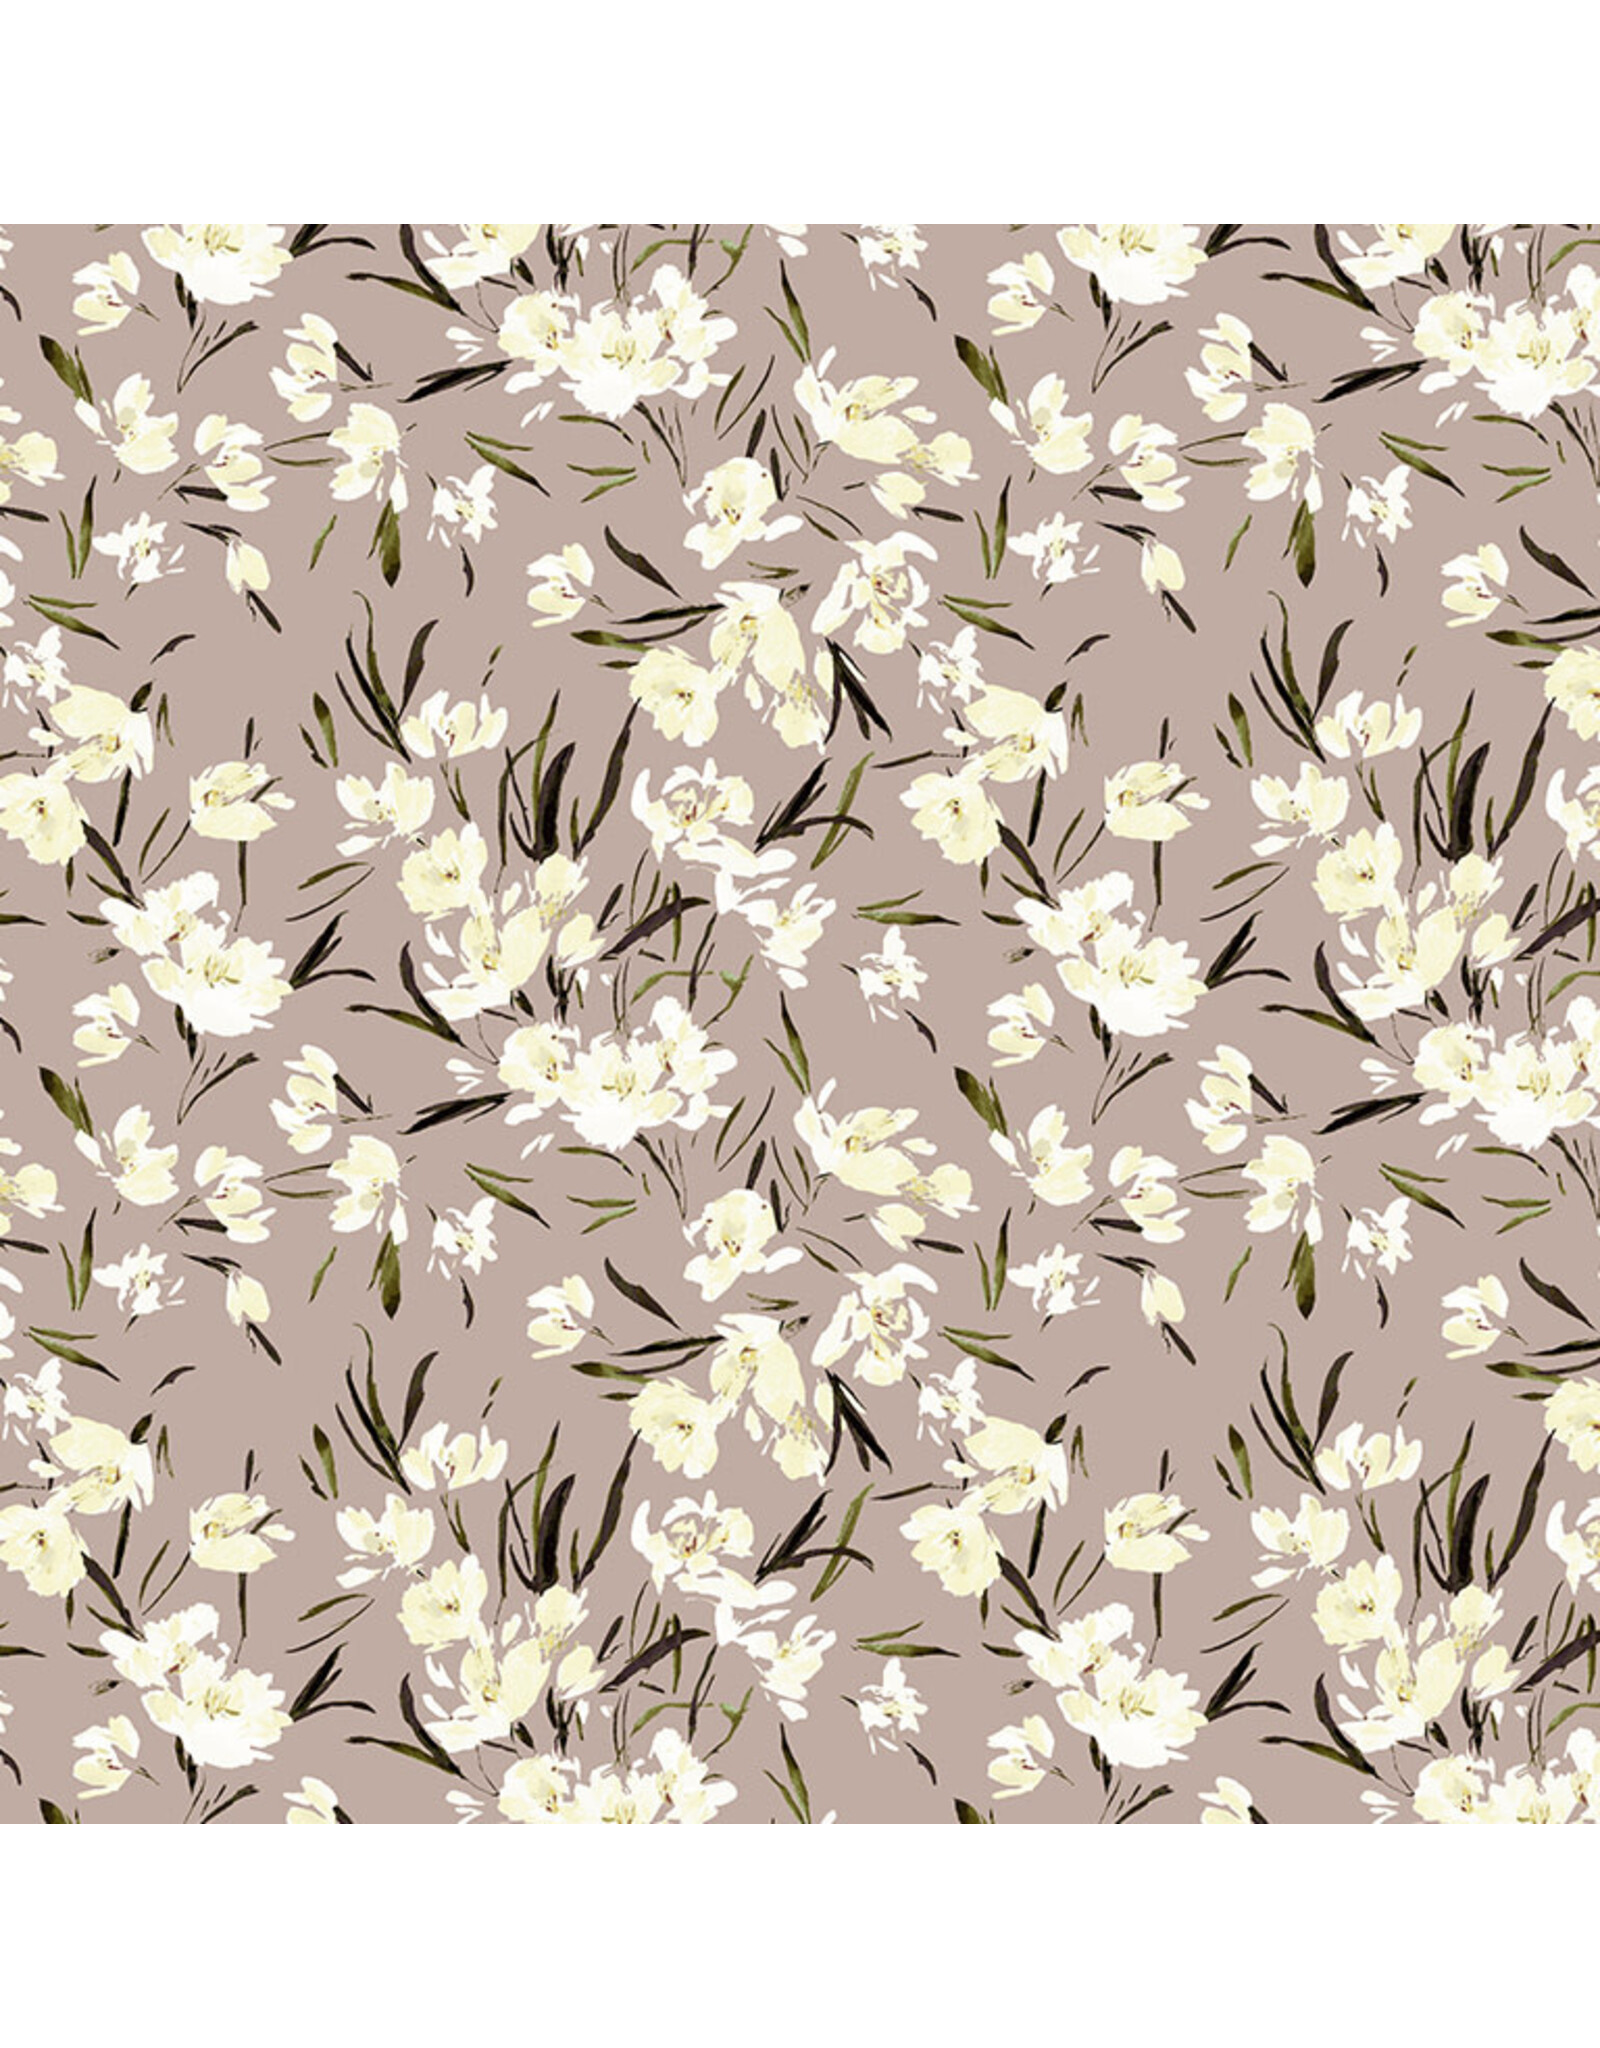 Kelly Ventura Perennial, Peony Tulip in Wisteria, Fabric Half-Yards